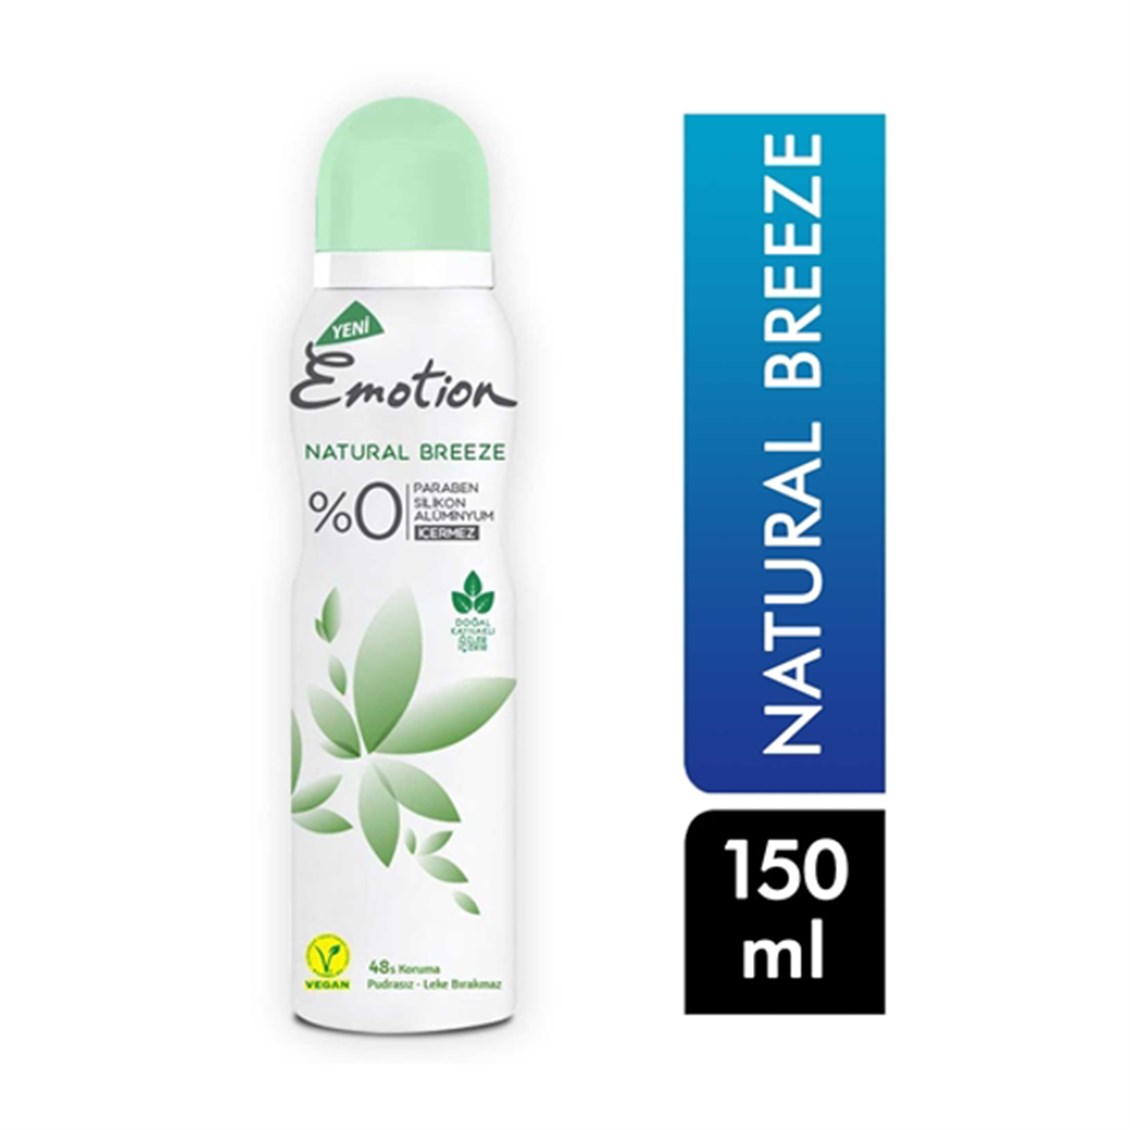 Emotion Natural Breeze Kadın Deodorant Sprey 150 ml - Onur Market